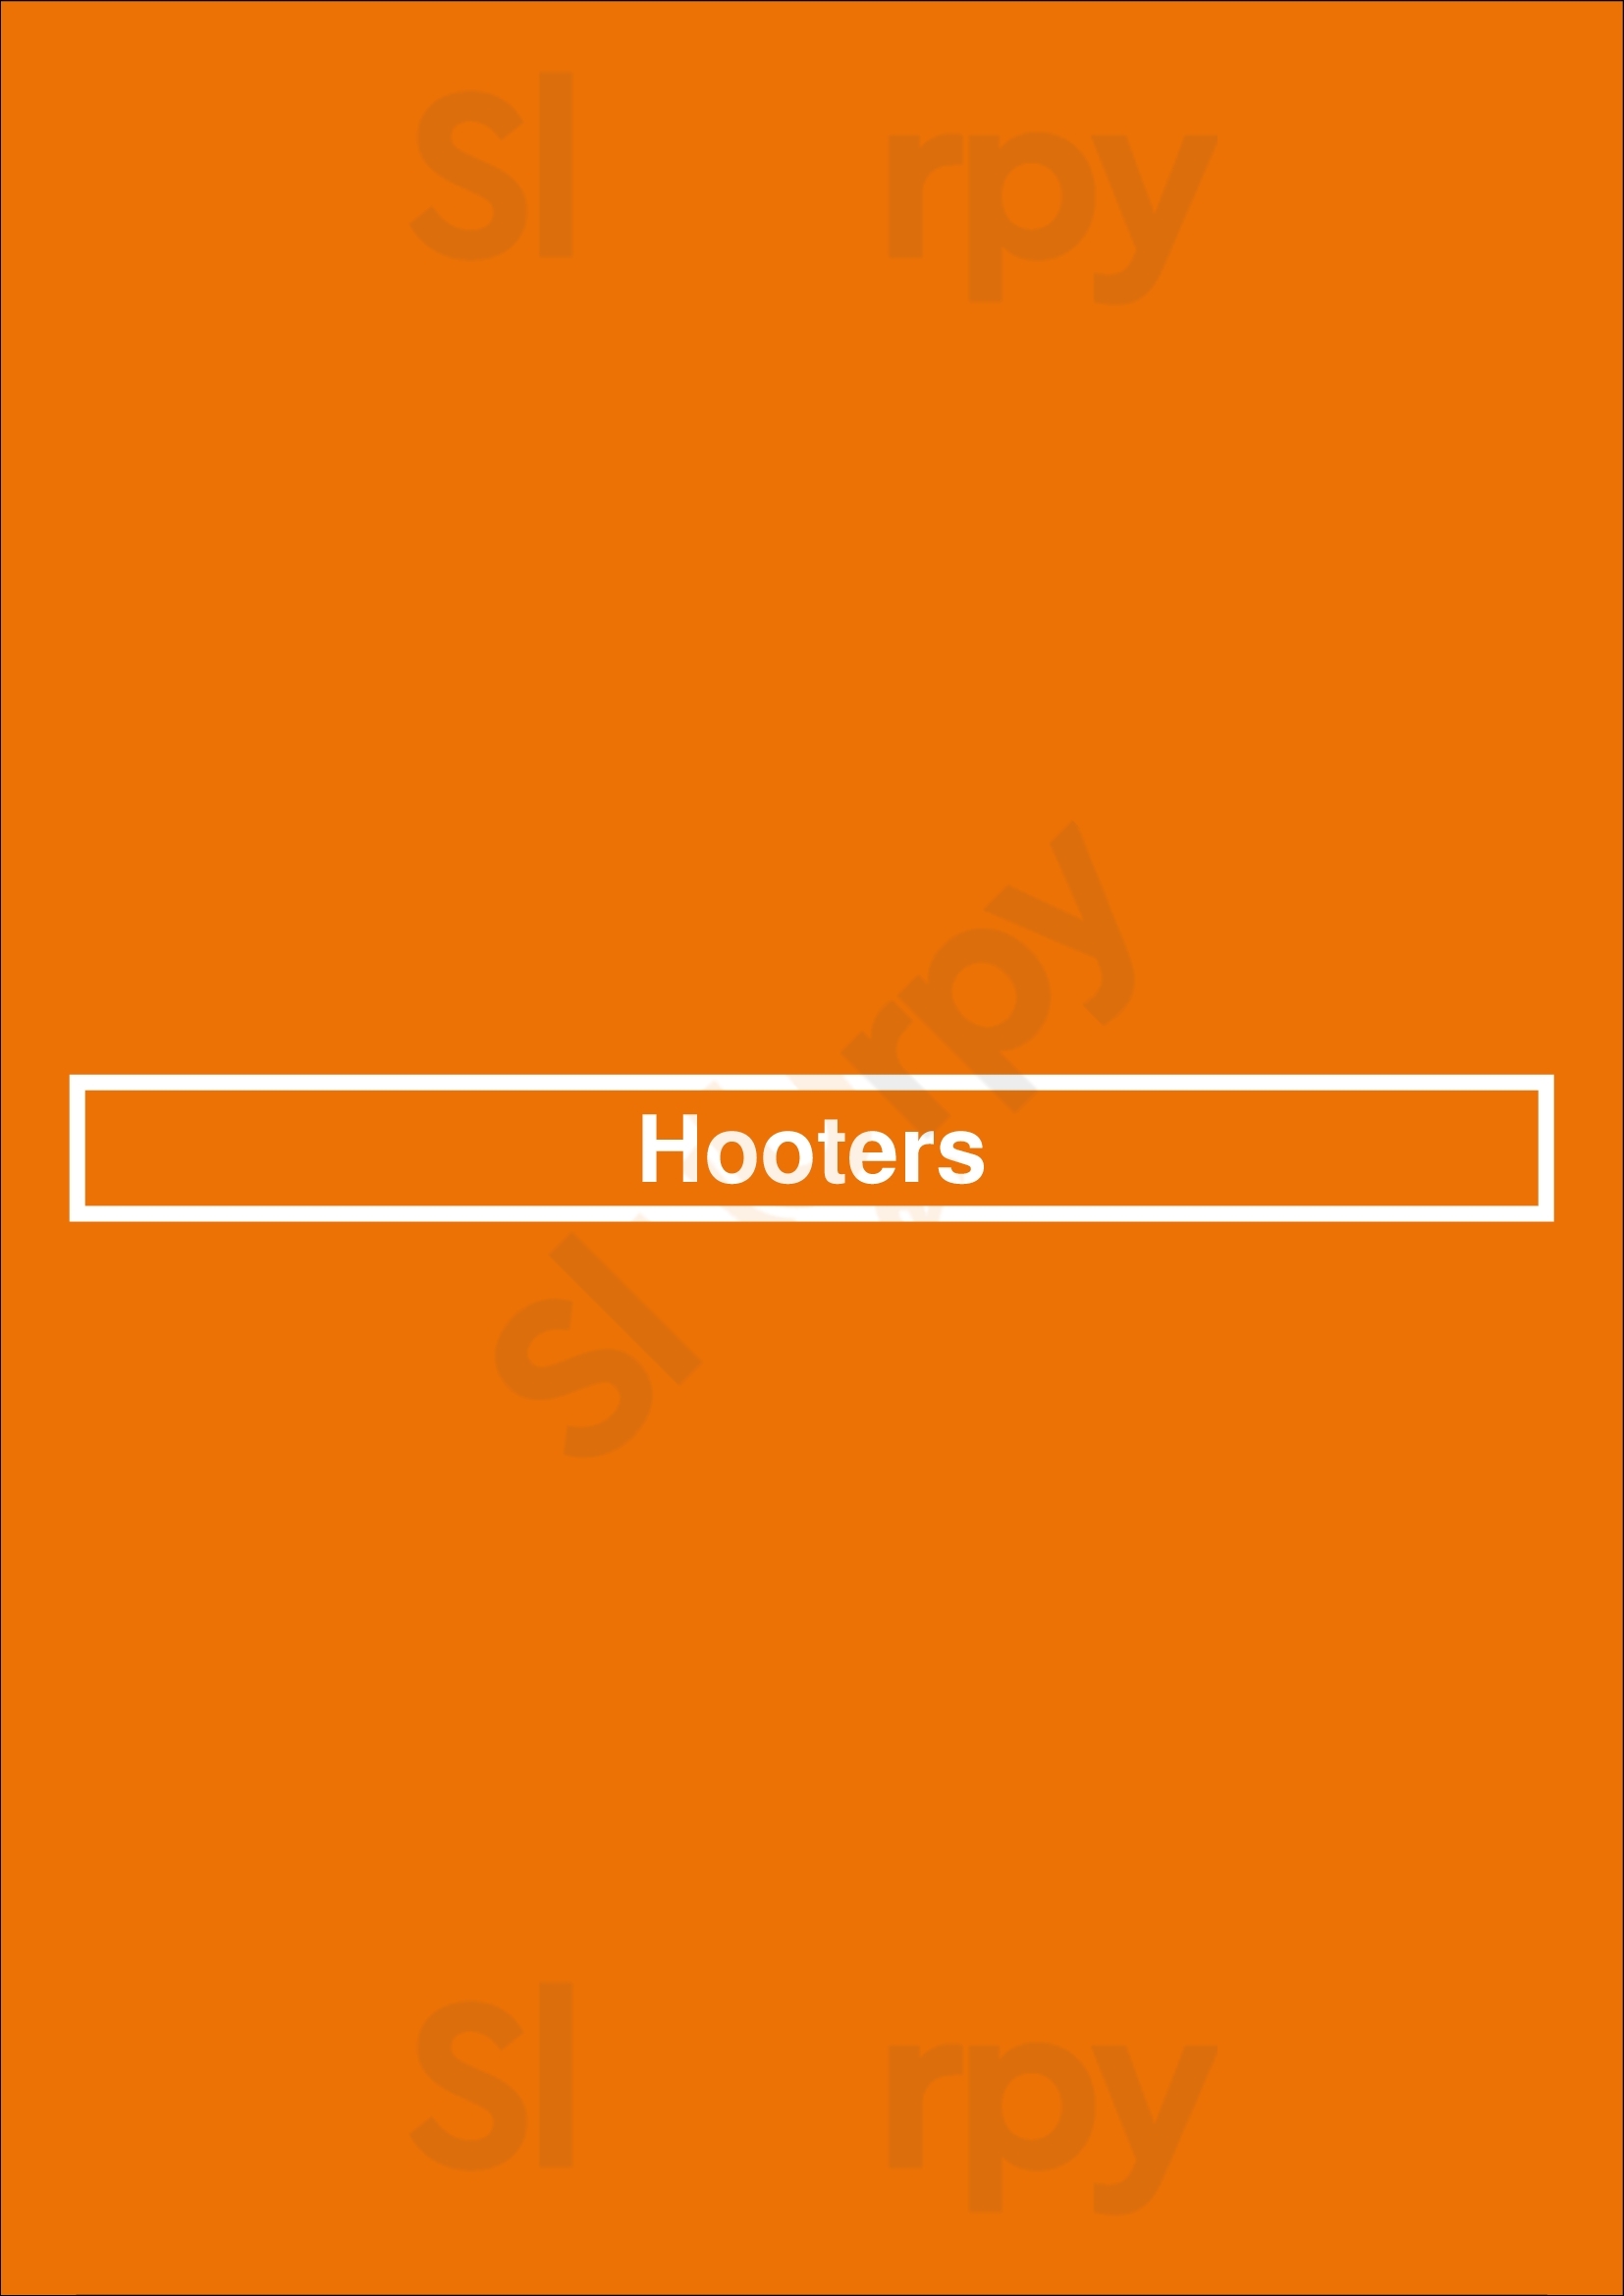 Hooters Kansas City Menu - 1